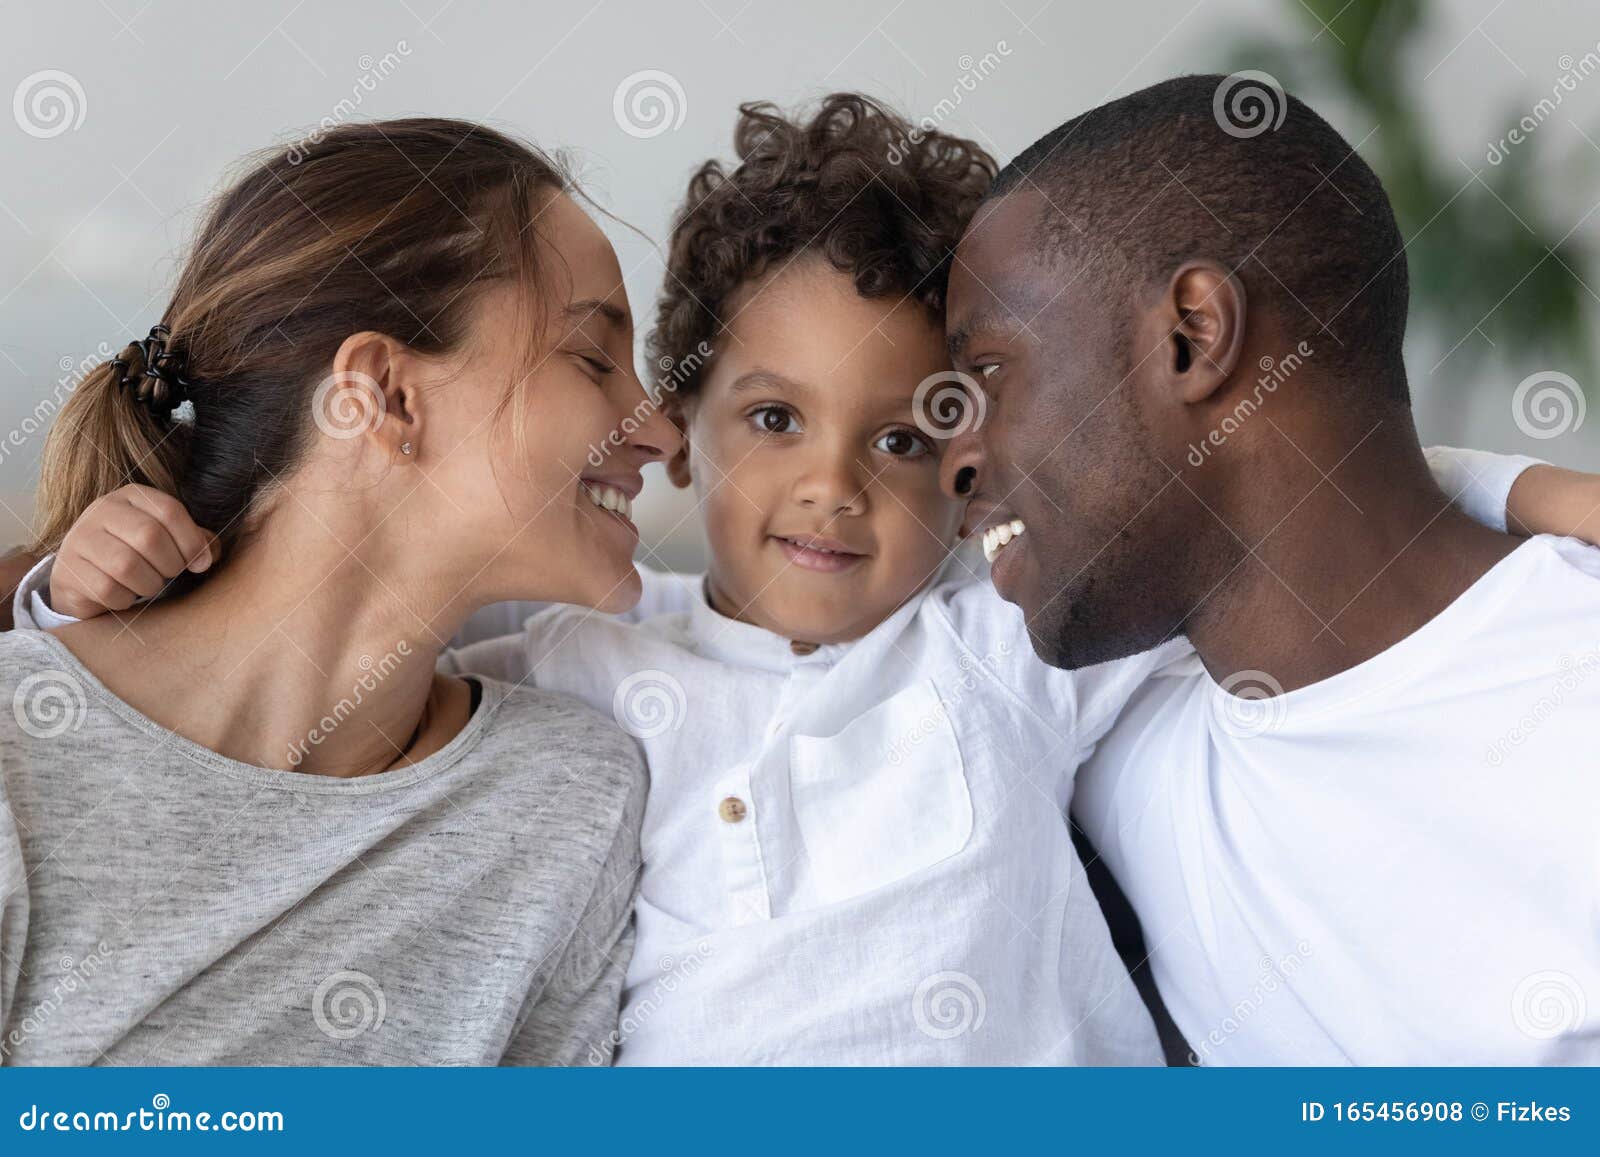 happy mixed race family bonding head shot close up portrait.